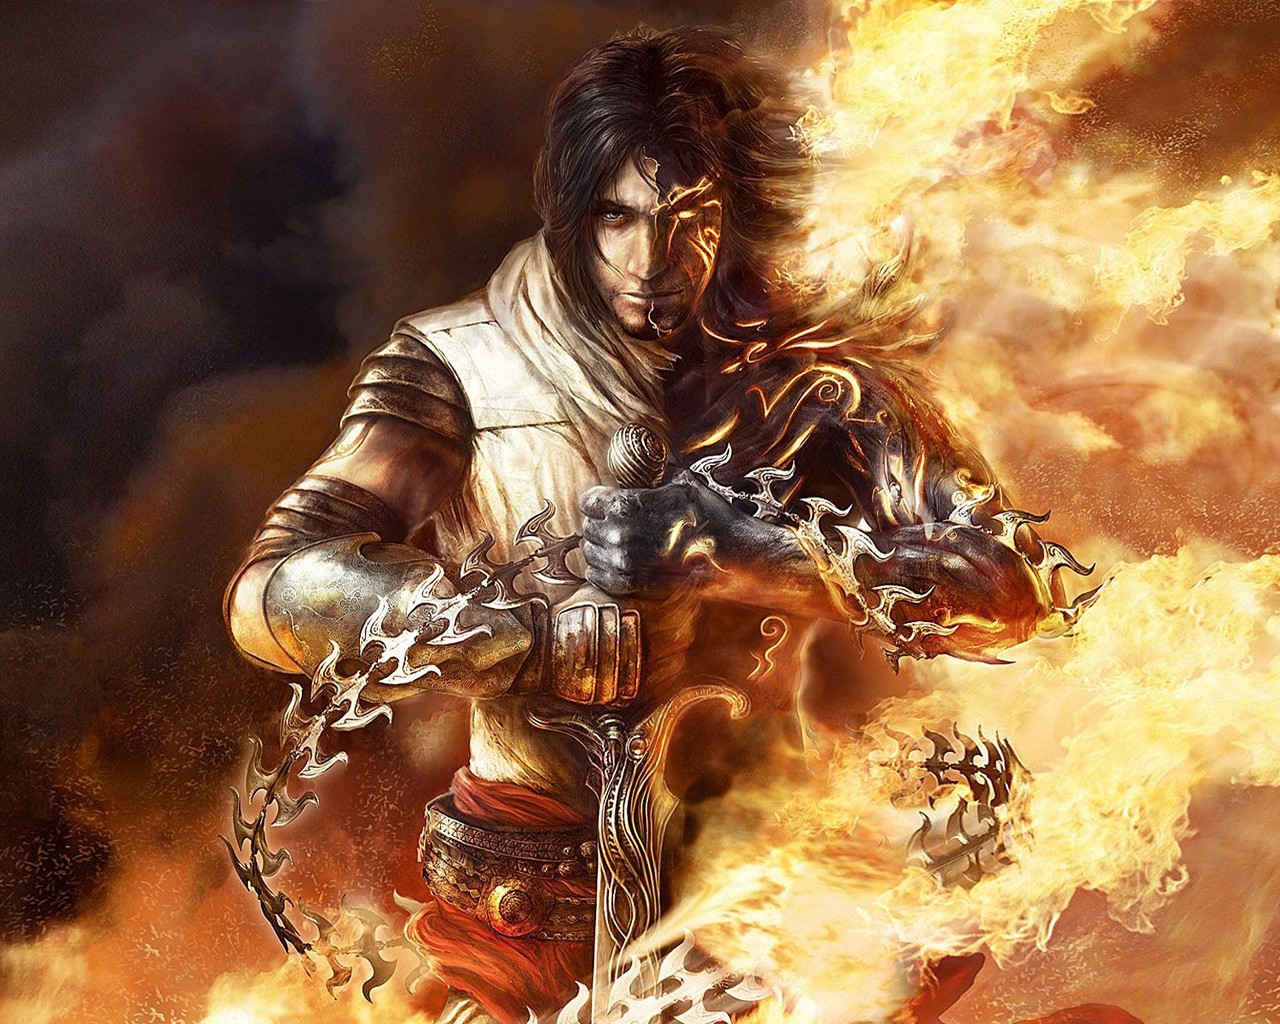 "Prince of Persia: The Two Thrones (Video Game)" desktop wallpaper (1280 x 1024 pixels)